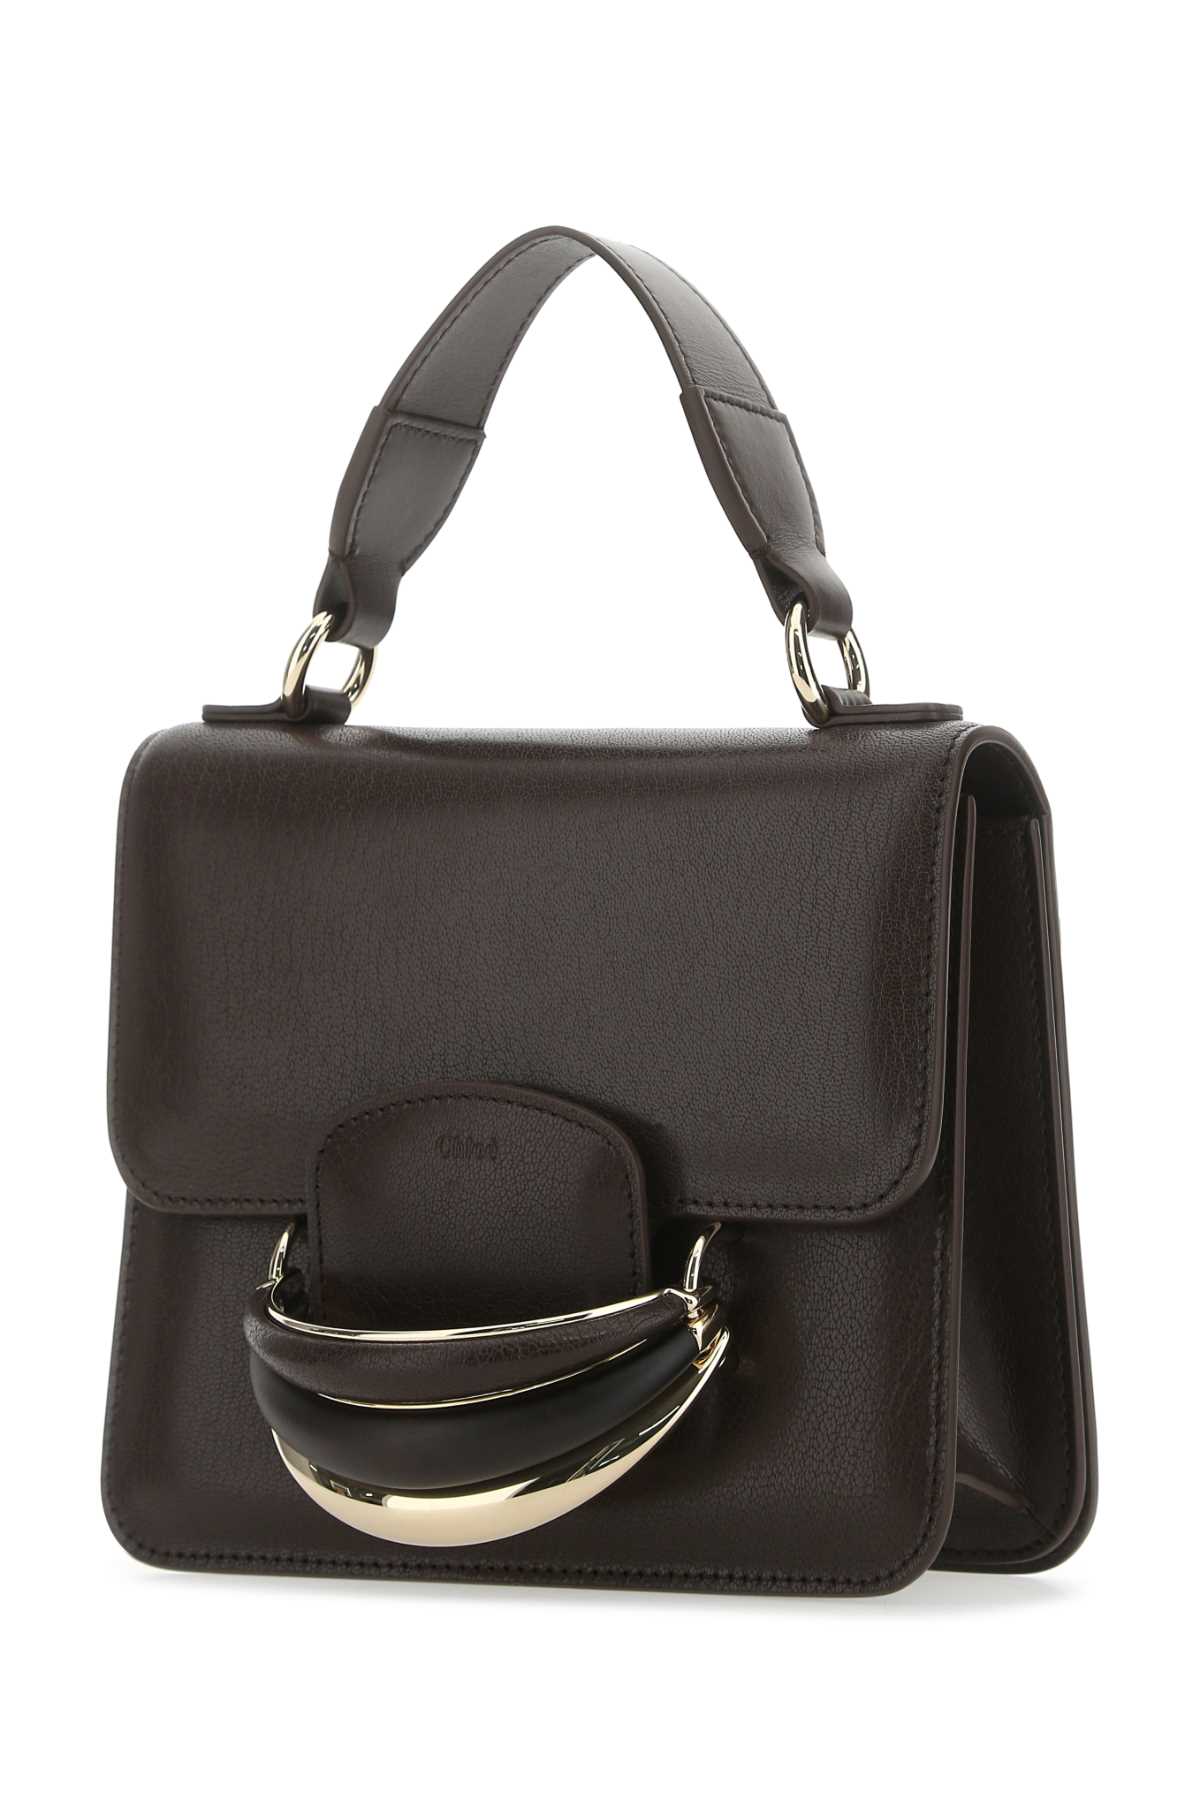 Chloé Dark Brown Leather Small Kattie Handbag In 297